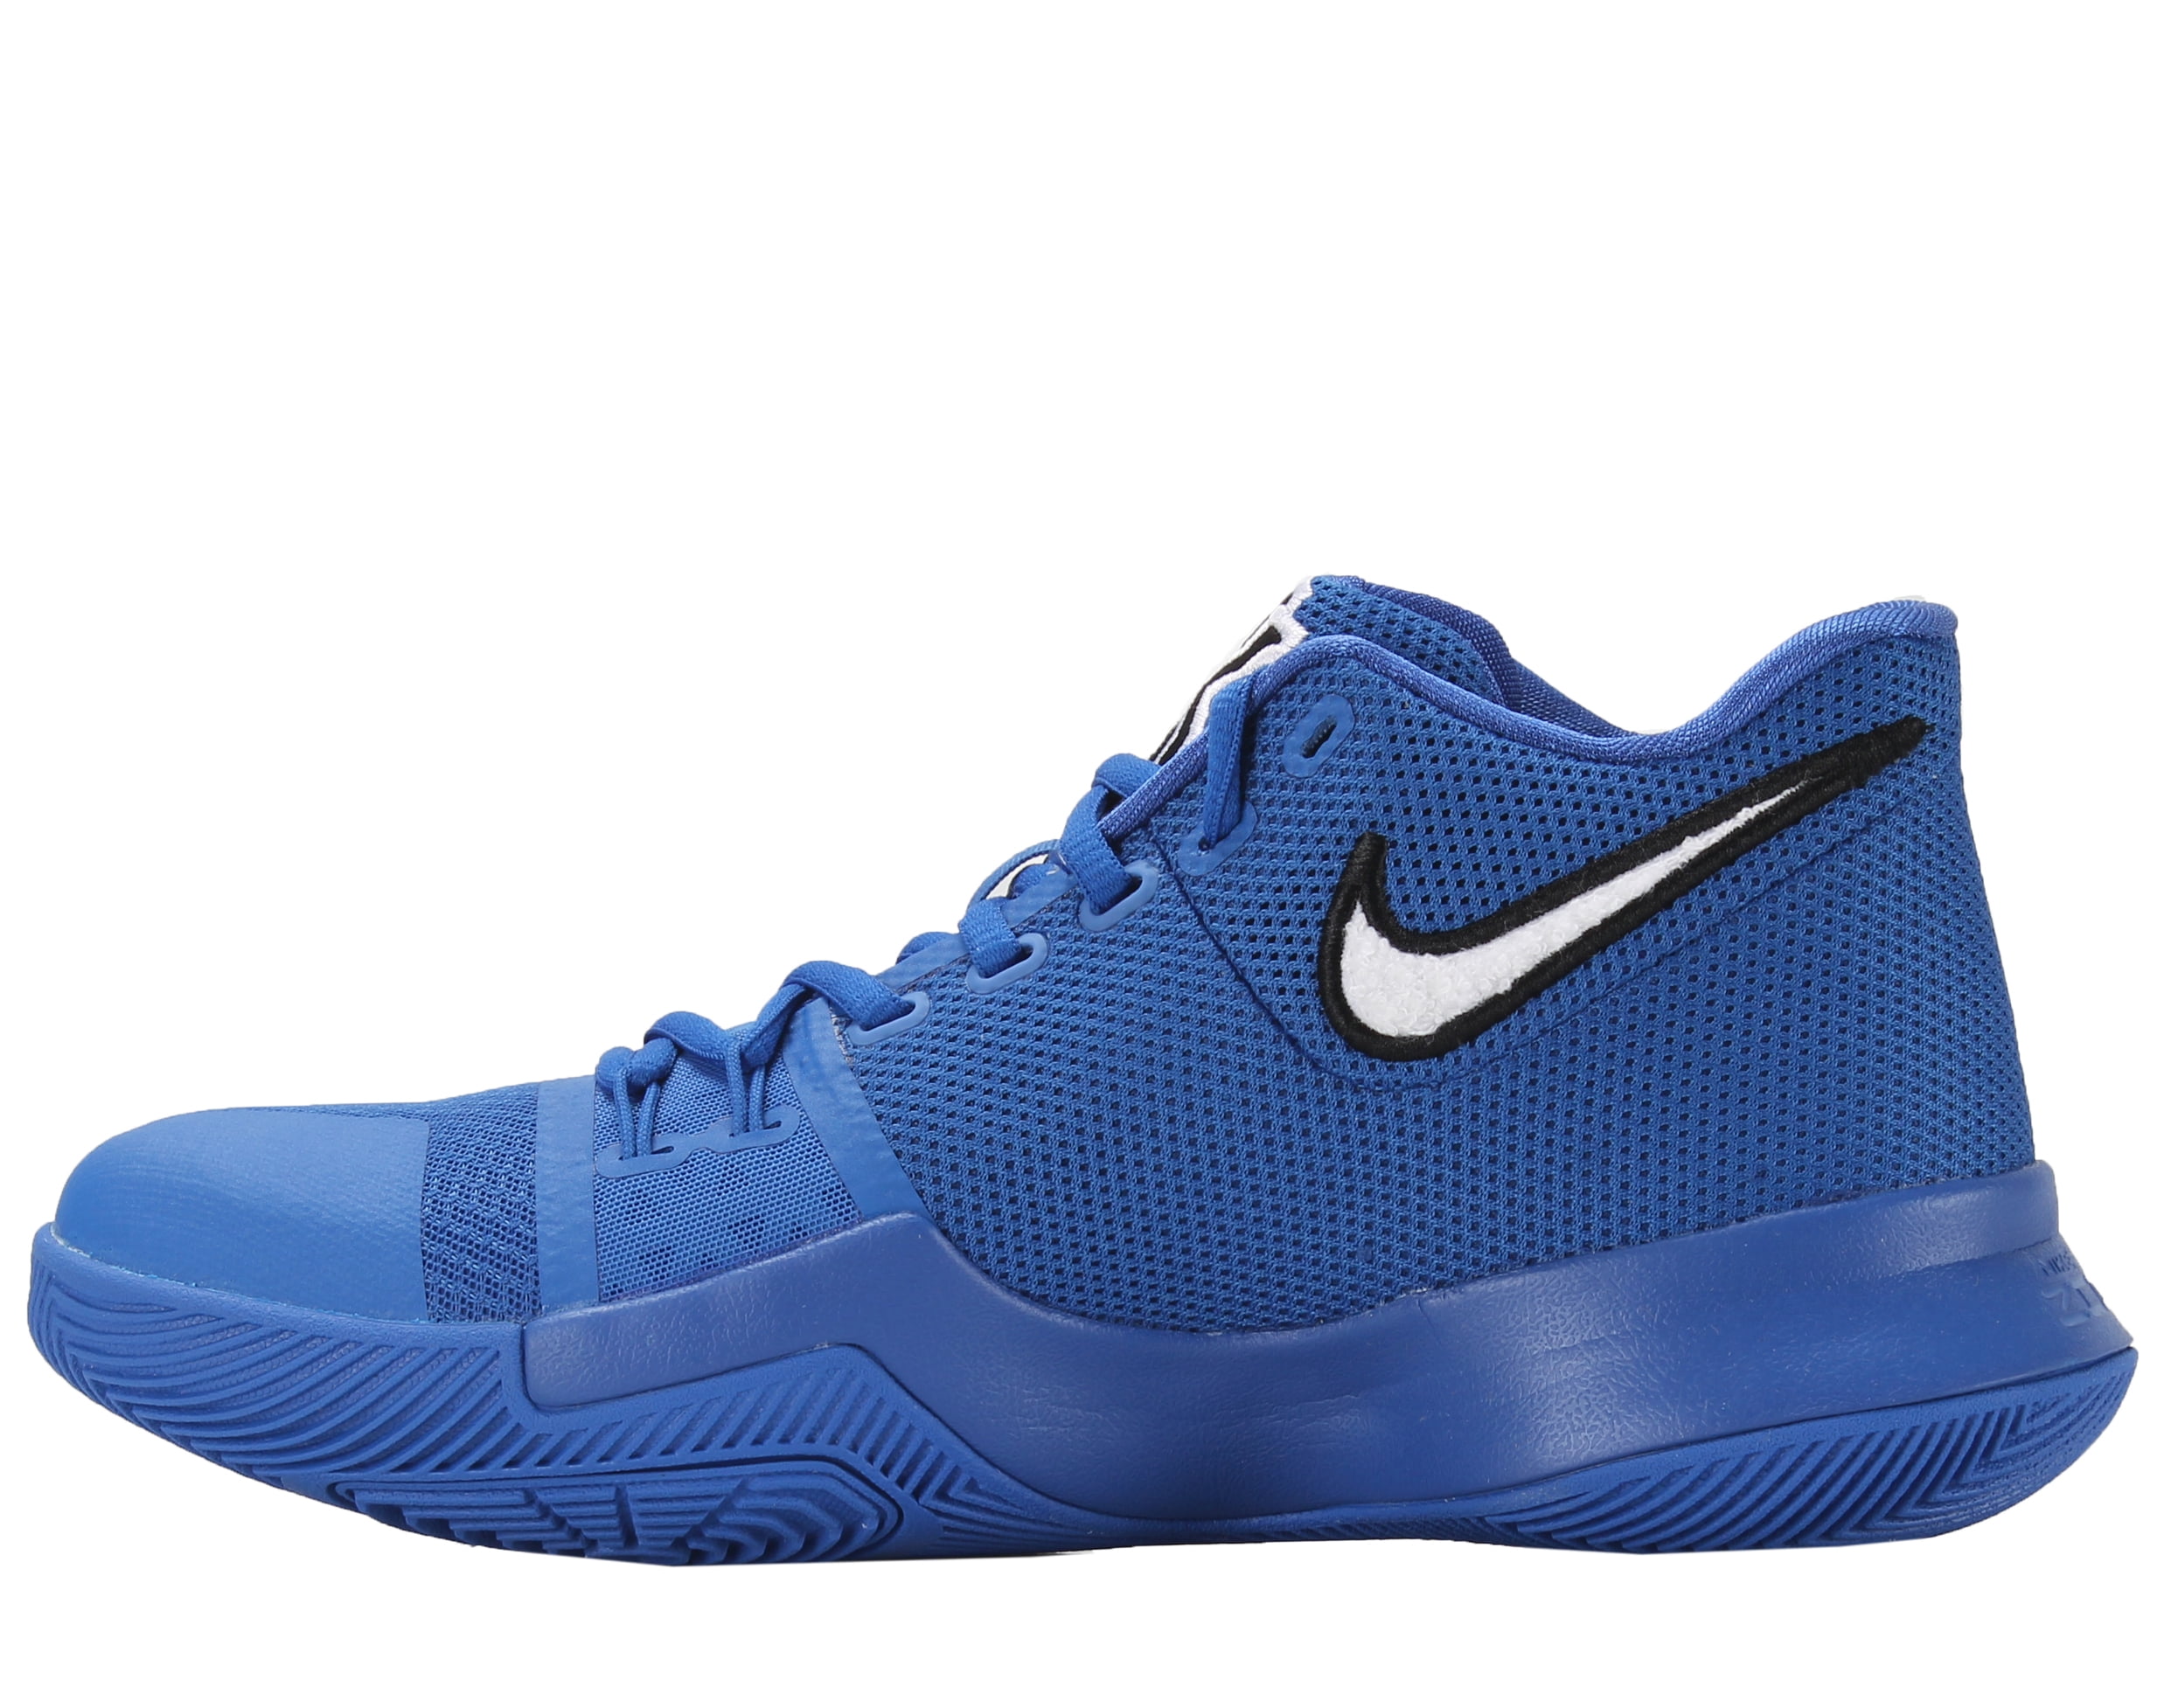 Nike Kyrie Duke Men's Basketball Size 11 - Walmart.com